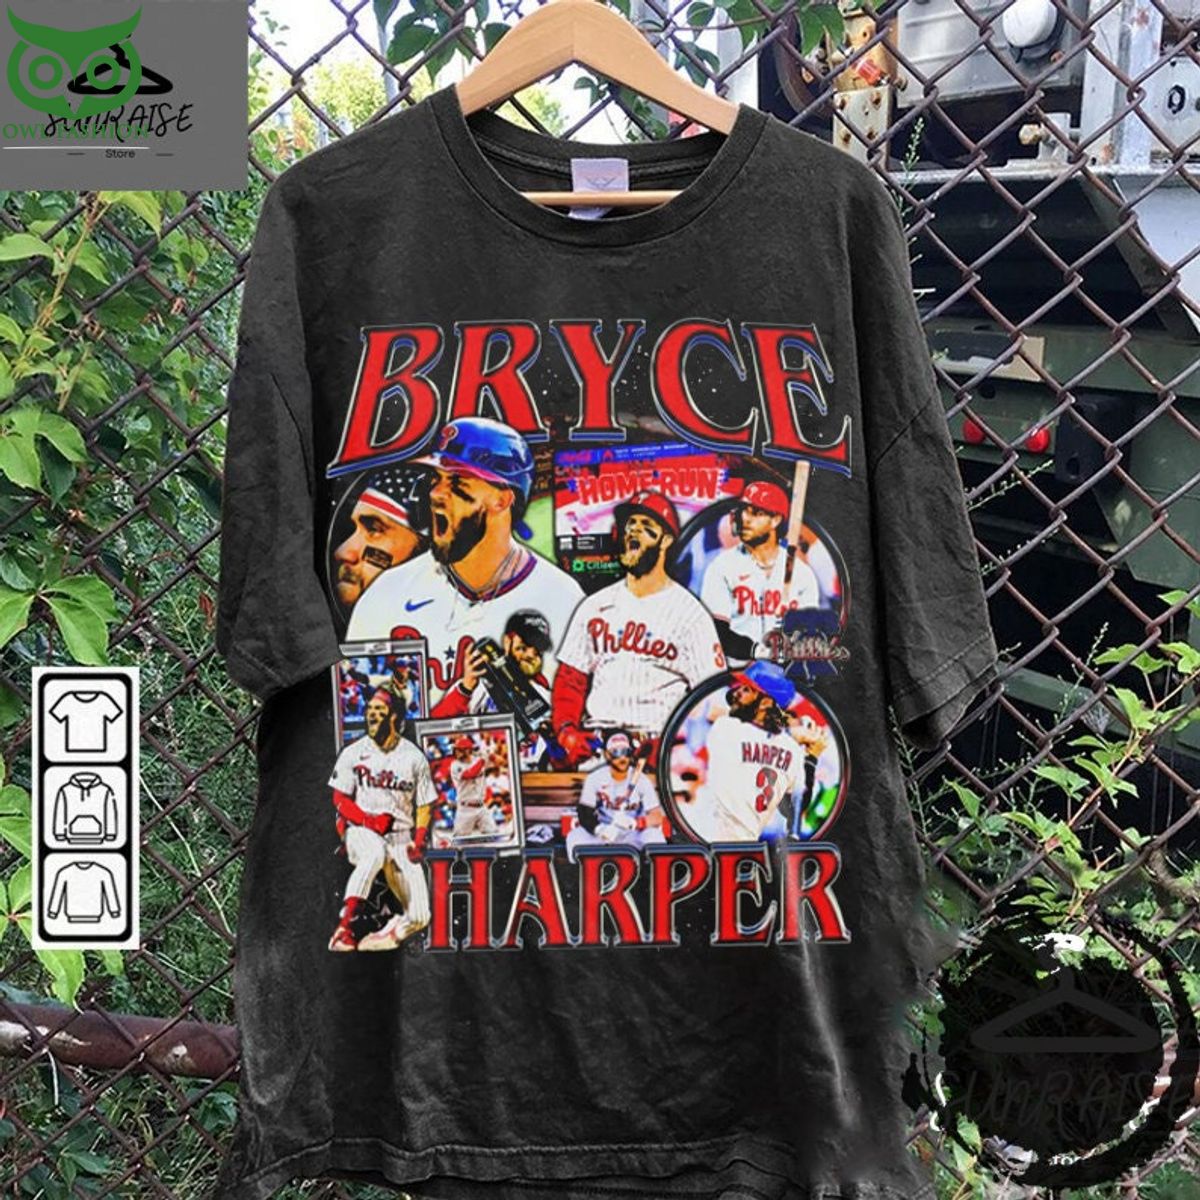 bryce harper trea turner shirt baseball bootleg mlb 1 wXipY.jpg